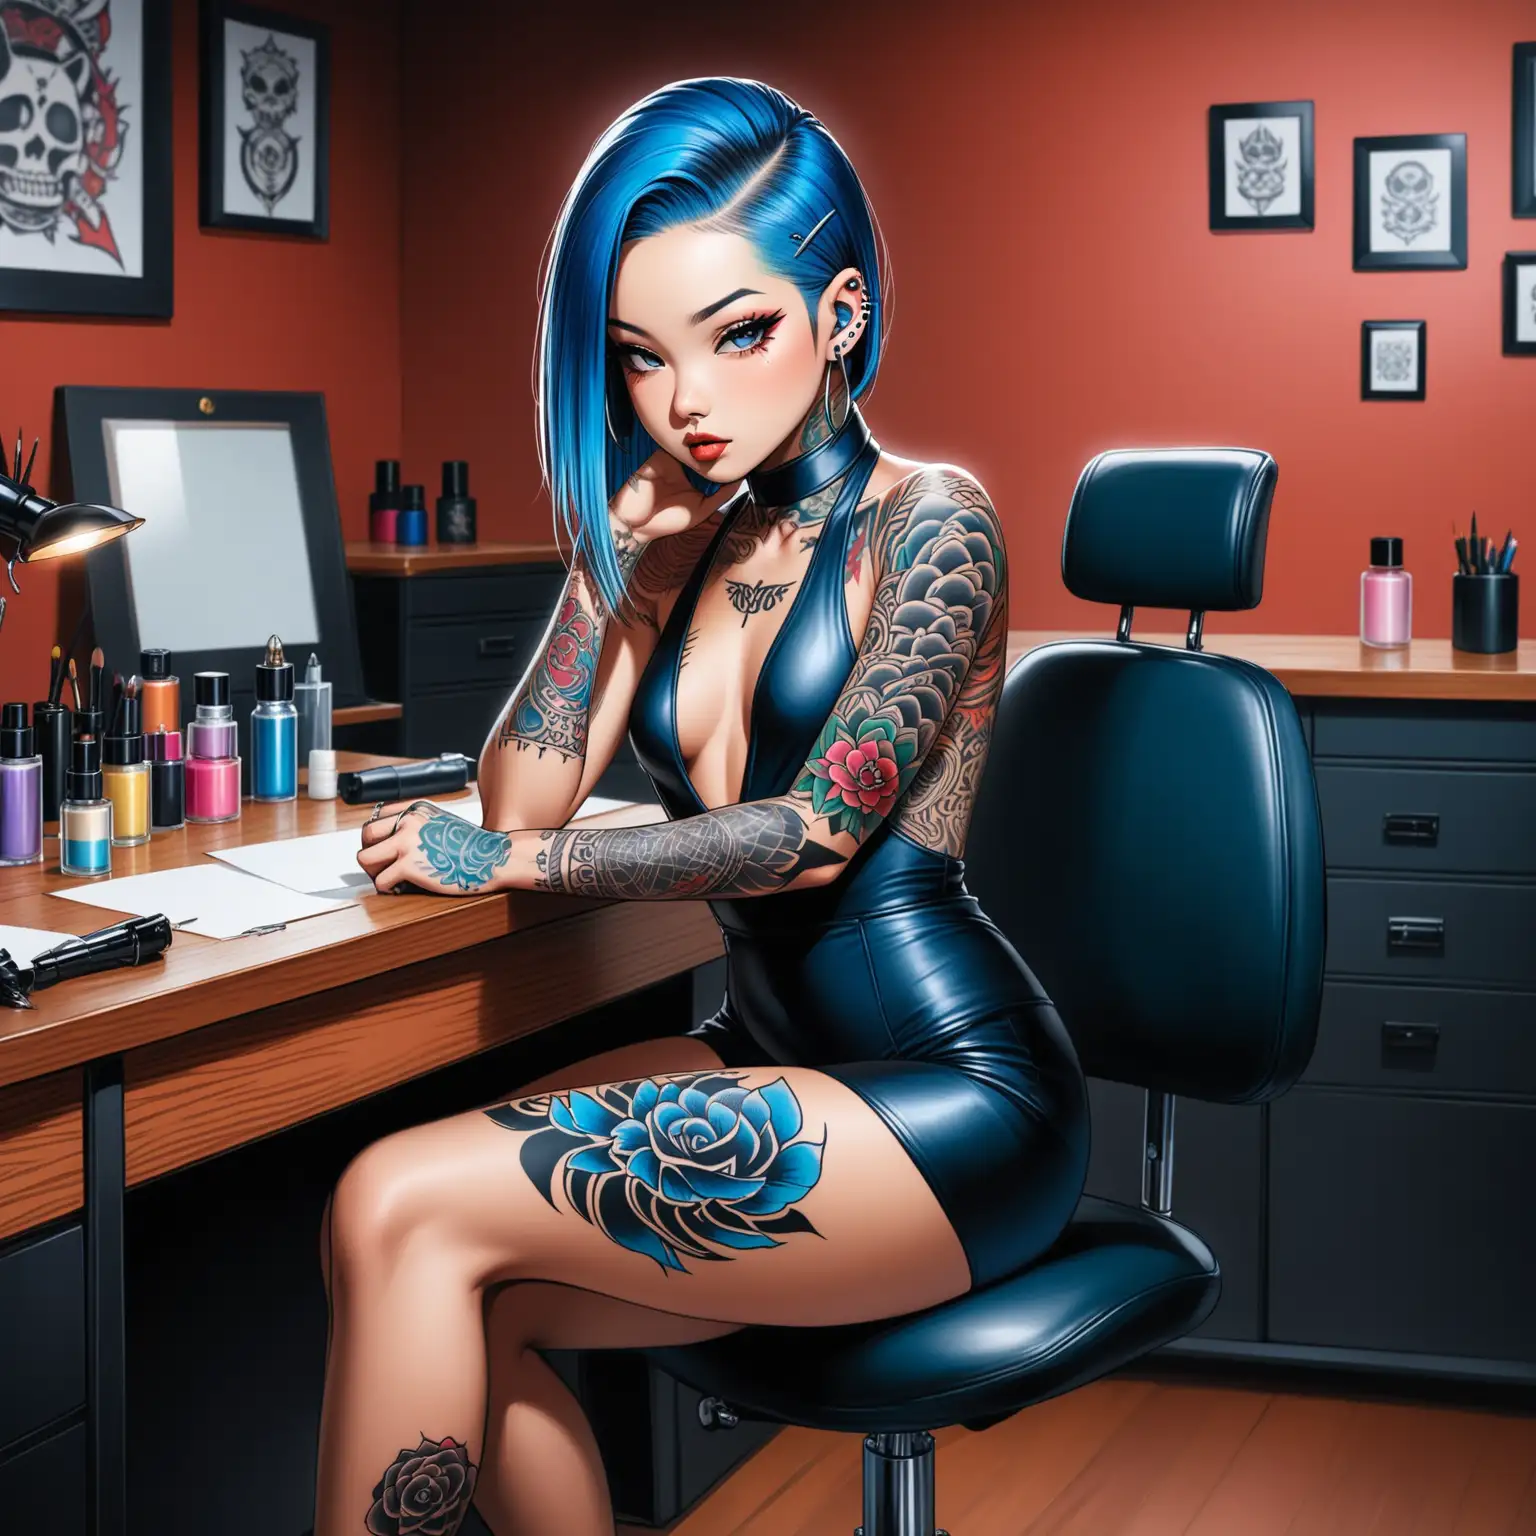 Edgy-HalfFilipino-Korean-Tattoo-Artist-with-Blue-Hair-at-Studio-Desk